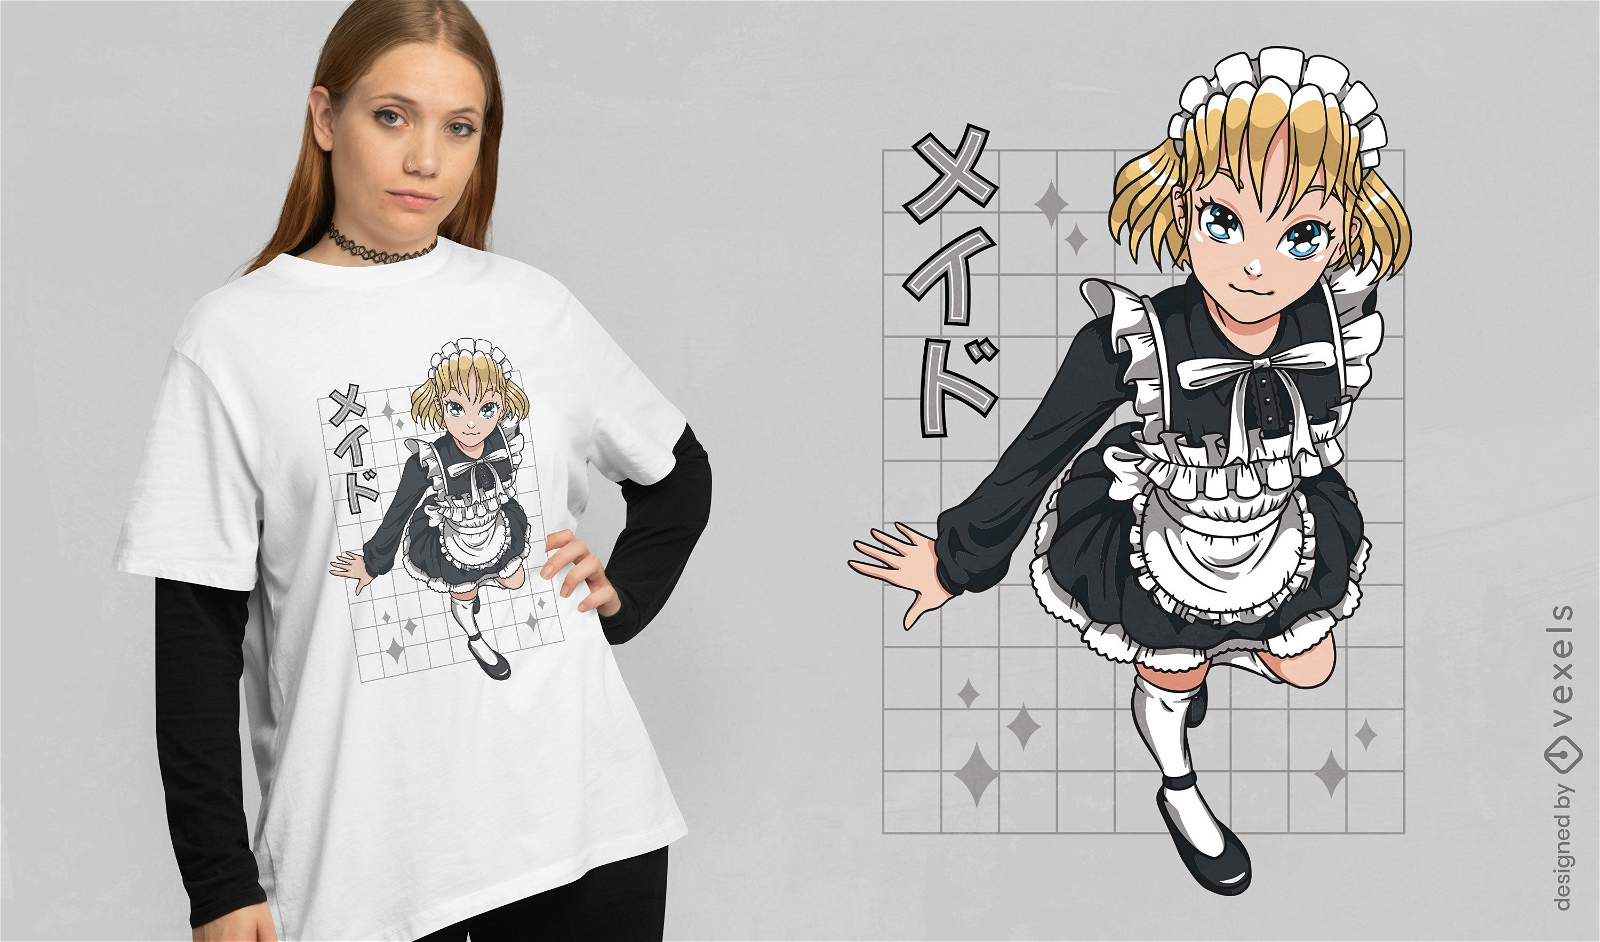 Dise?o de camiseta japonesa de anime maid girl